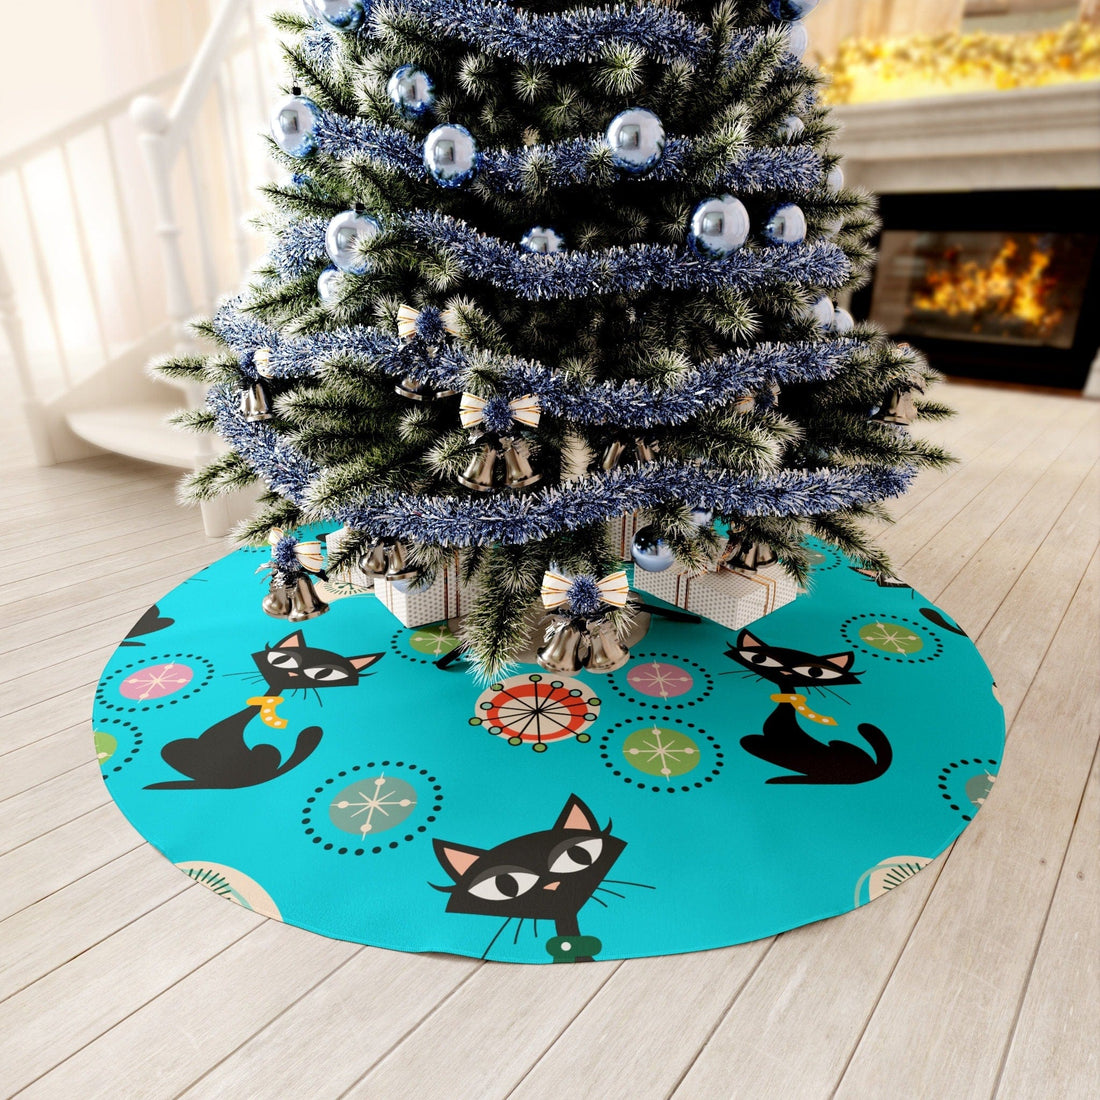 Kate McEnroe New York Atomic Kitschy Cat Tree Skirt, Mid Century Modern Holiday Decoration, Retro Vintage Christmas DecorChristmas Tree Skirts85212566080233442367